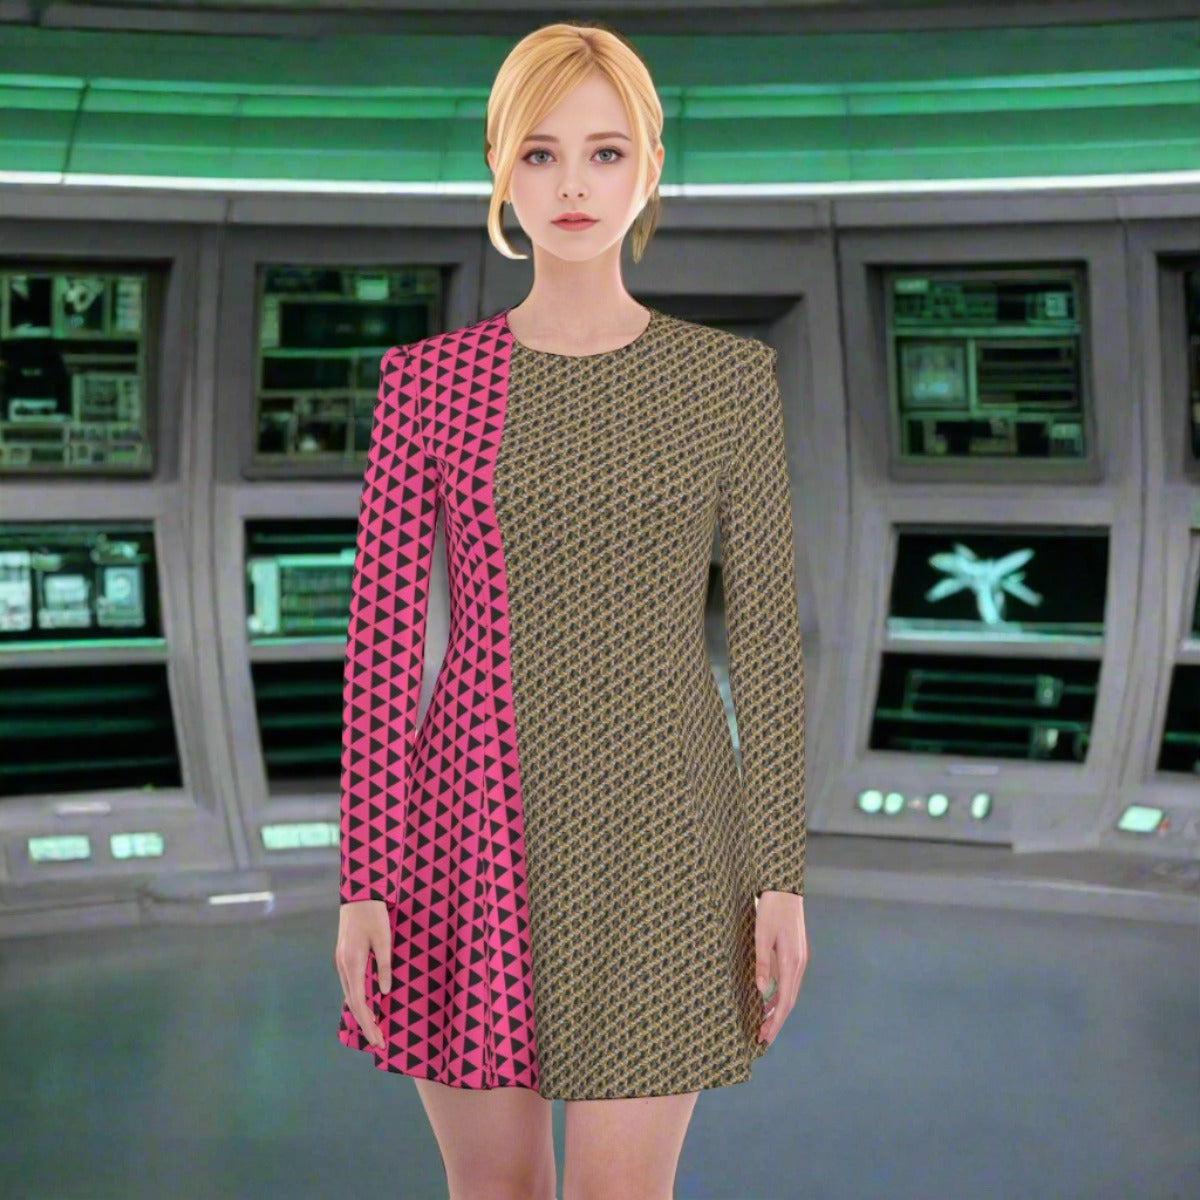 TOS Style female Romulan Commander Uniform Dress Costume